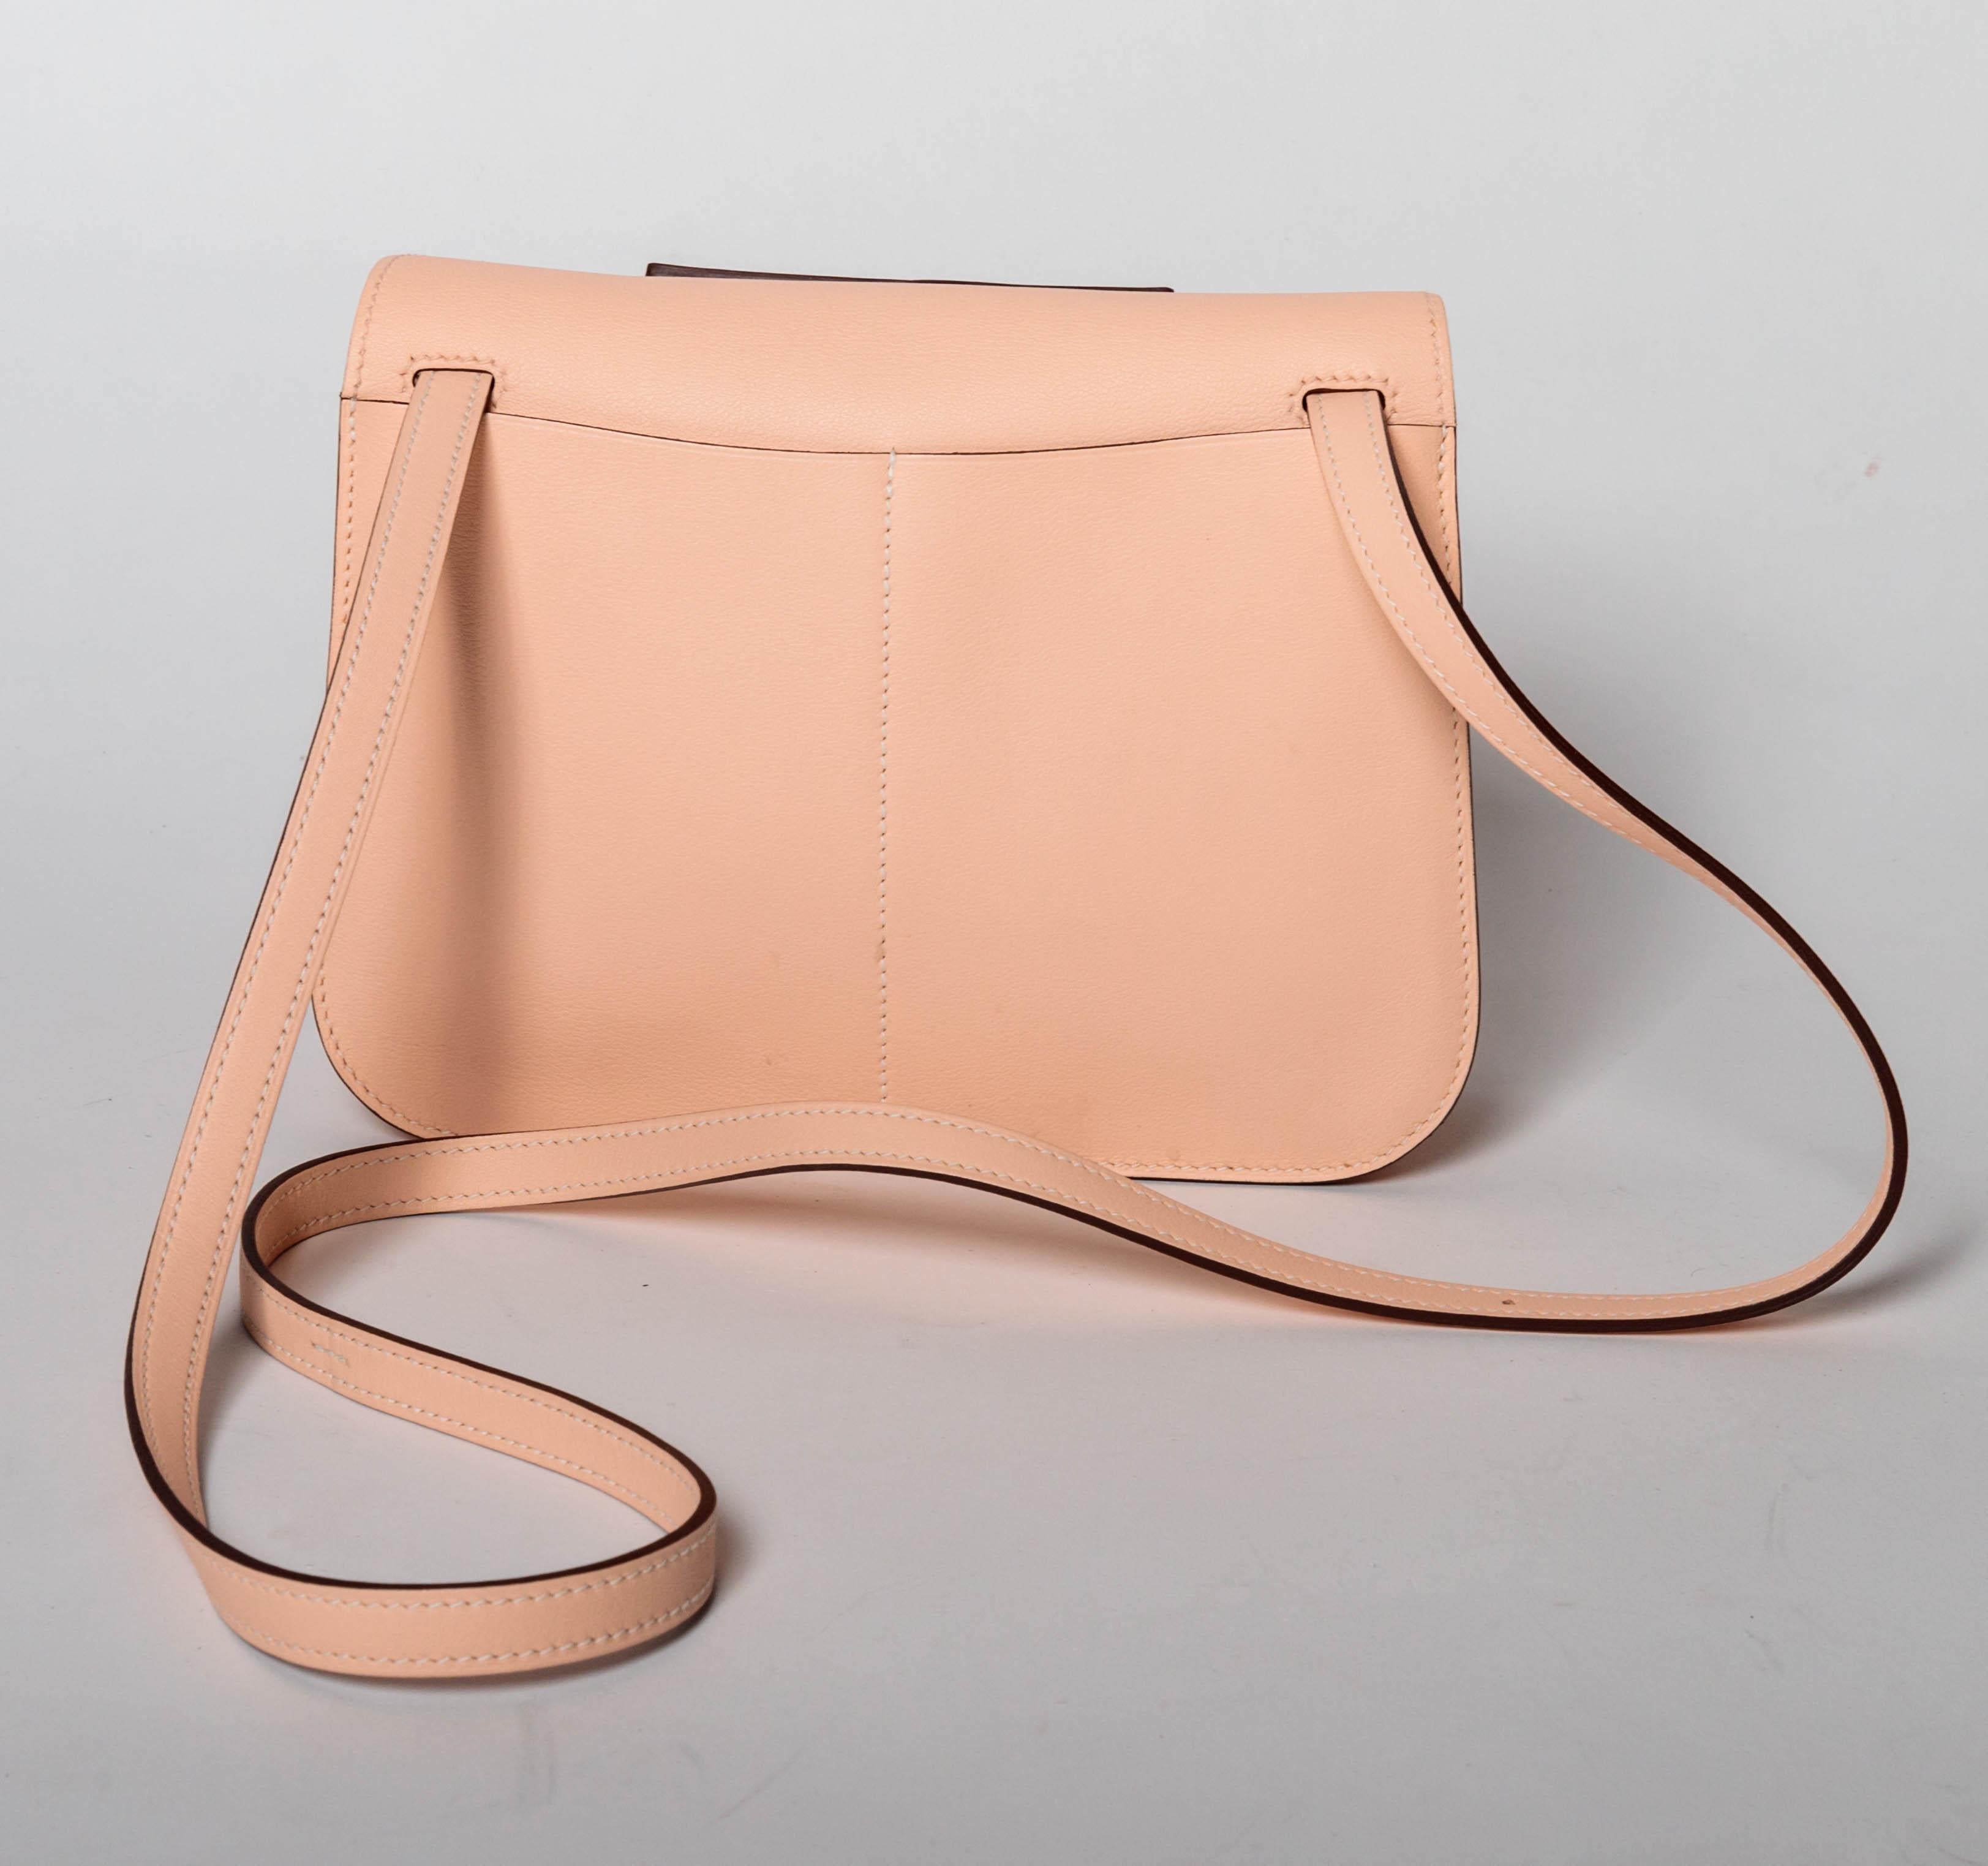 Hermes bag in Swift calfskin
Adjustable and removable leather shoulder strap
Stirrup-shaped handles
Palladium plated hardware  See less
Measures 8.5